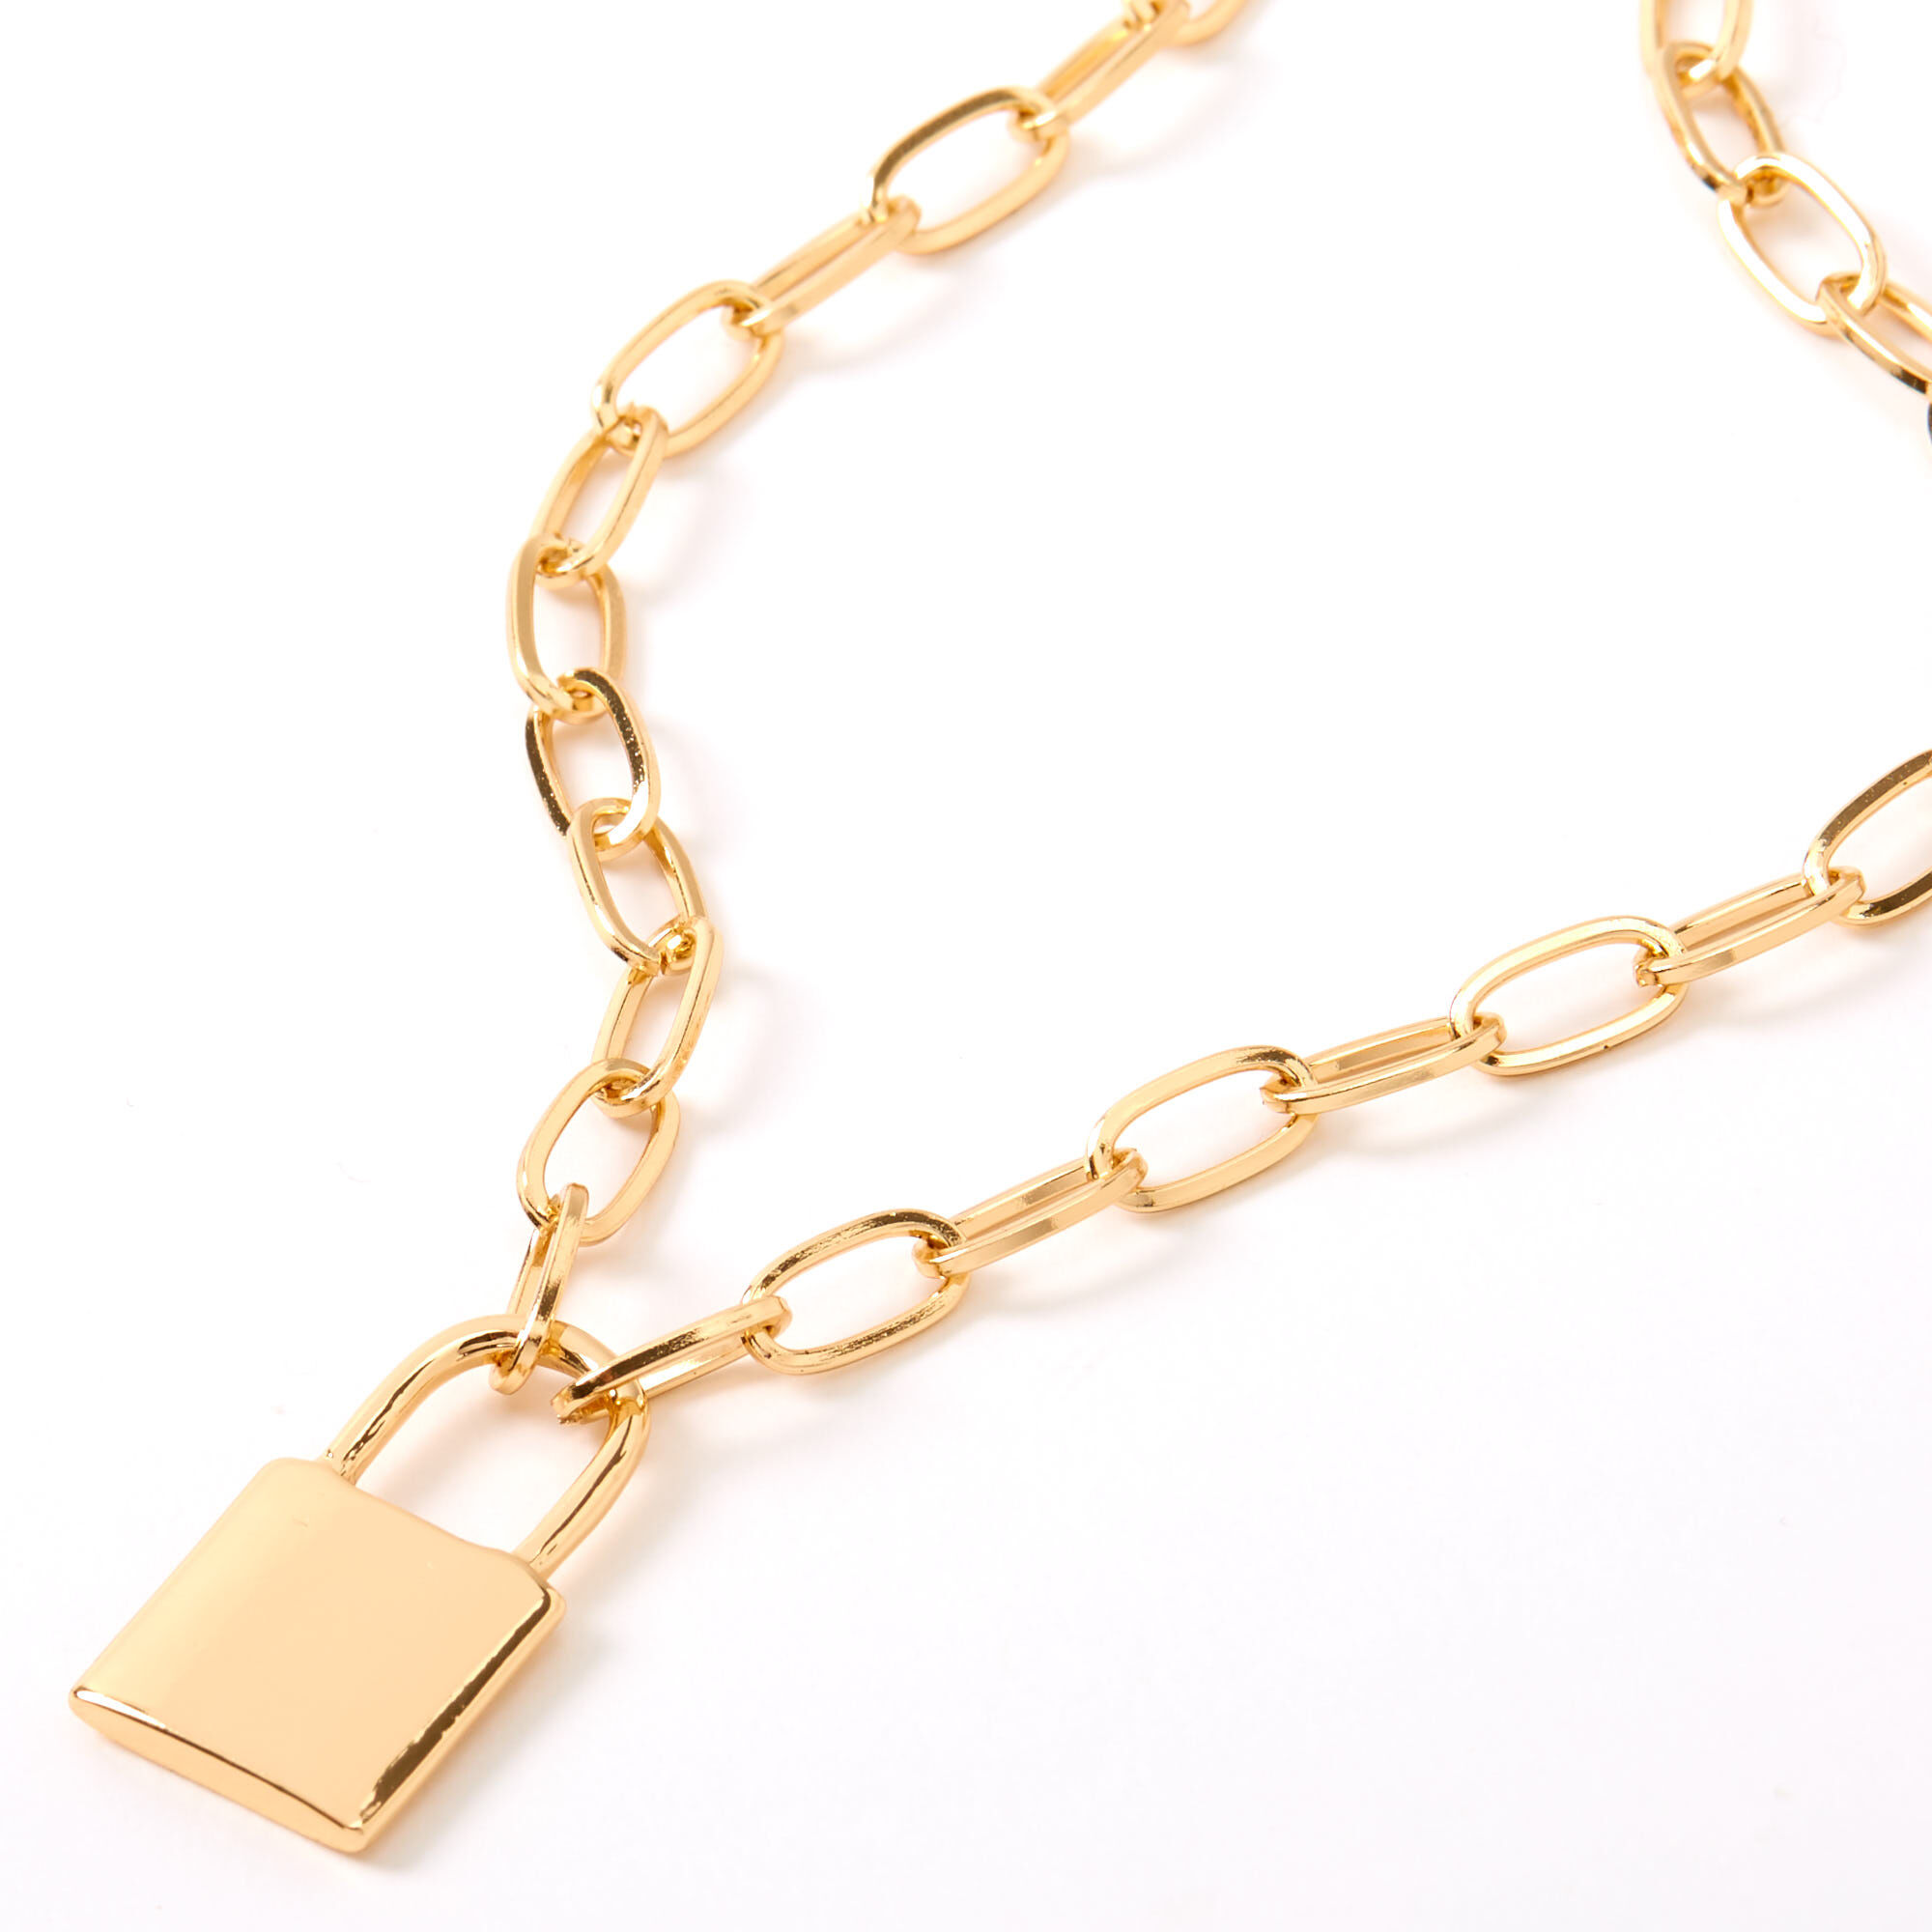 Gold Necklace Lock Pendant | Lock Necklace Women Gold | Necklace Lock Chain  - Gold - Aliexpress